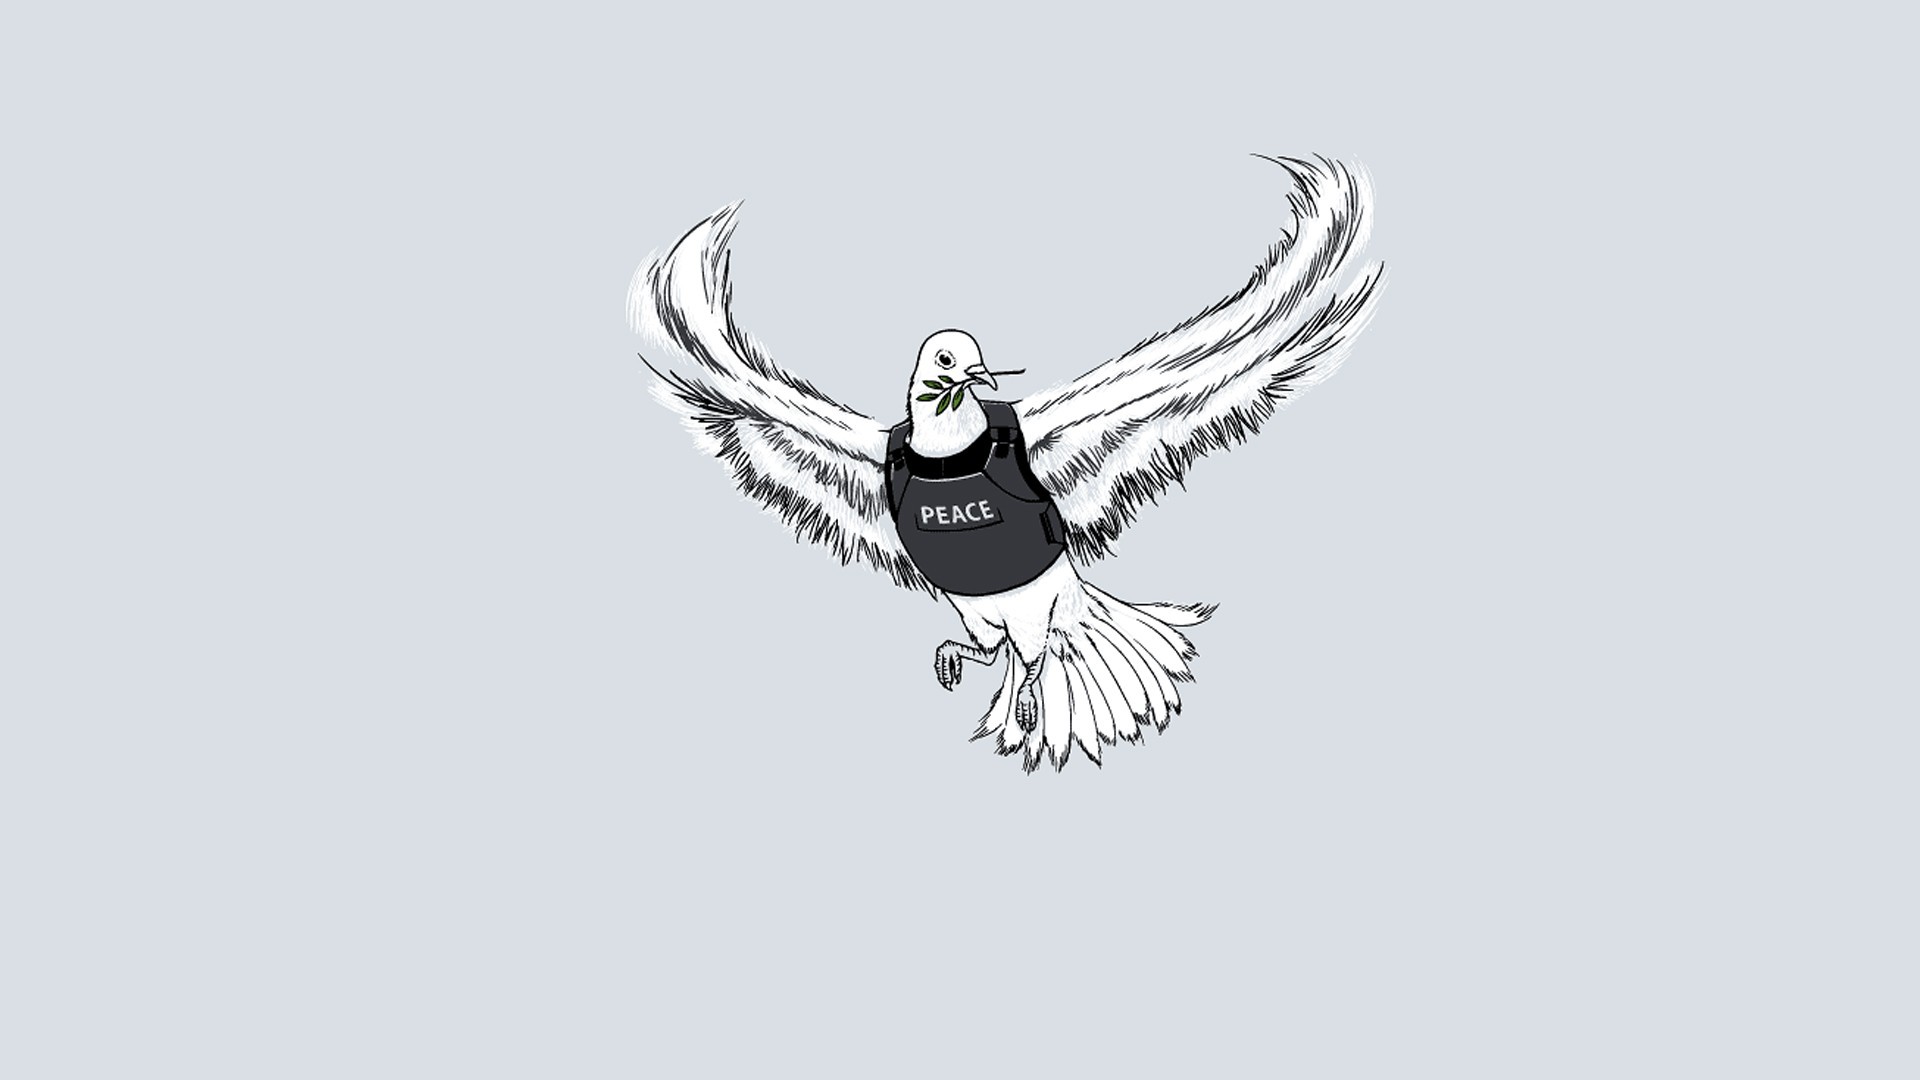 General 1920x1080 minimalism peace war animals wings birds artwork humor